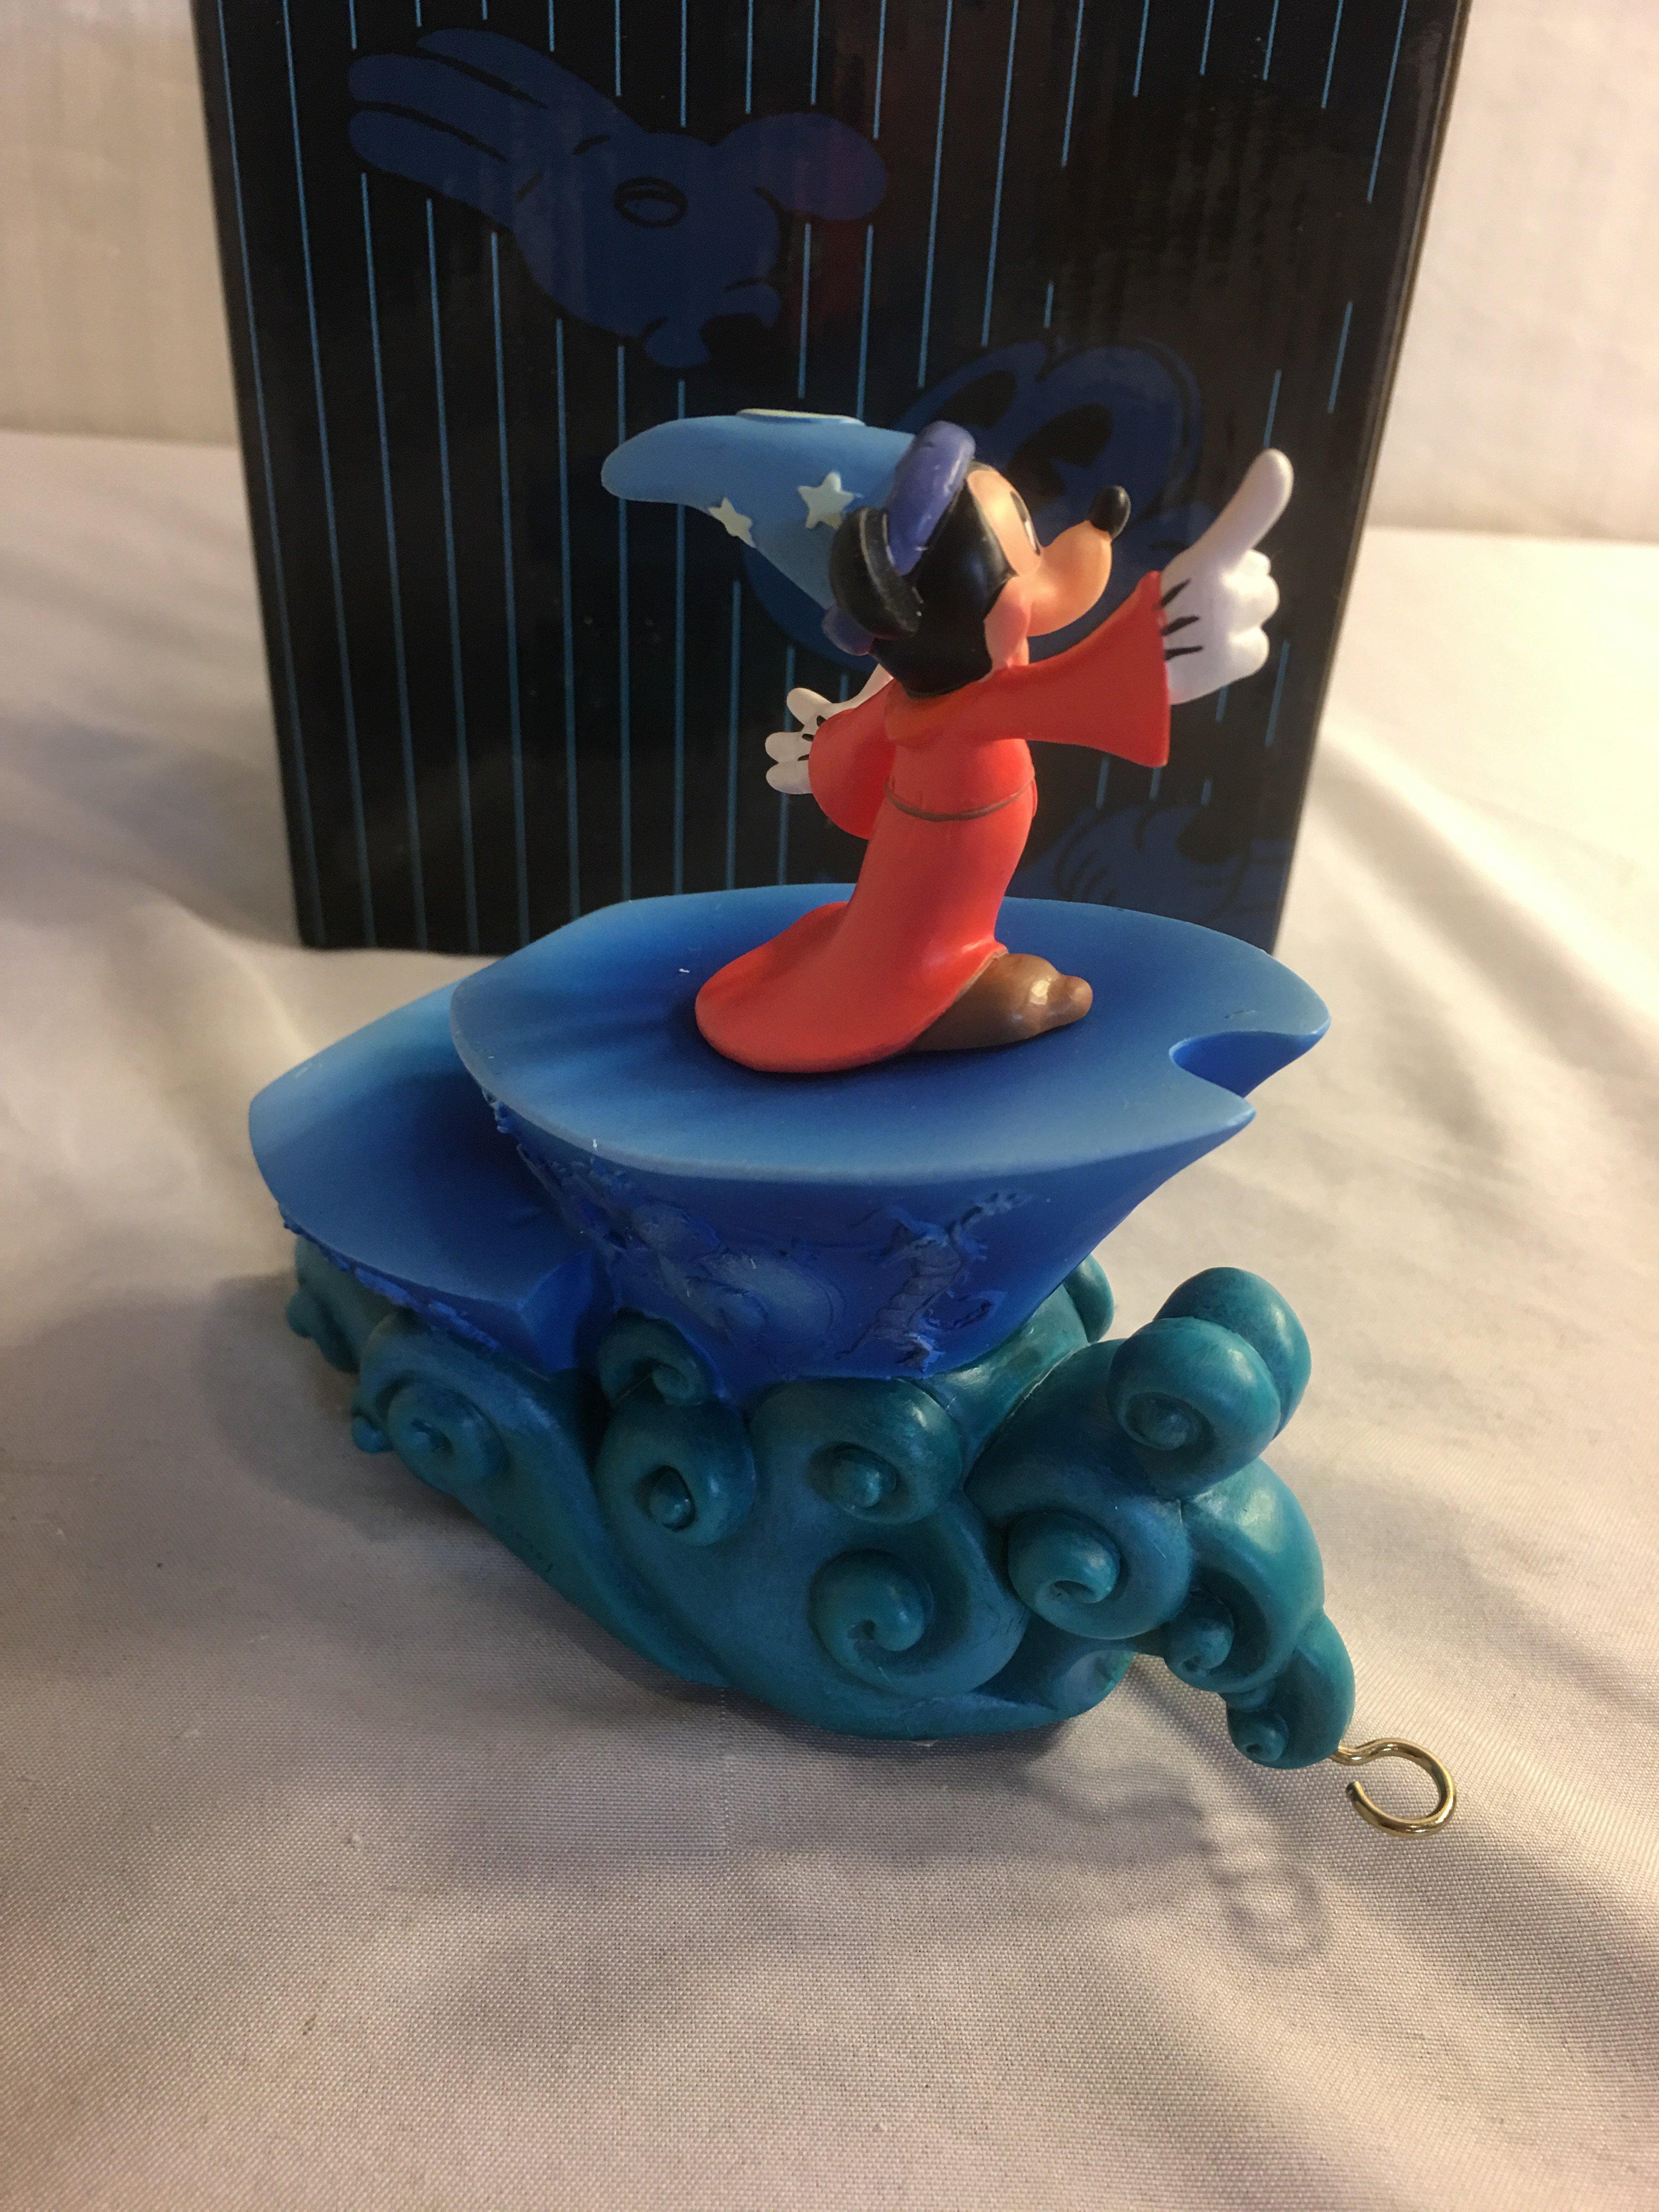 Enesco Disney Showcase Collection #4031536 Fantasia Parade Float Ltd. Edt. Figurine 6.5"box